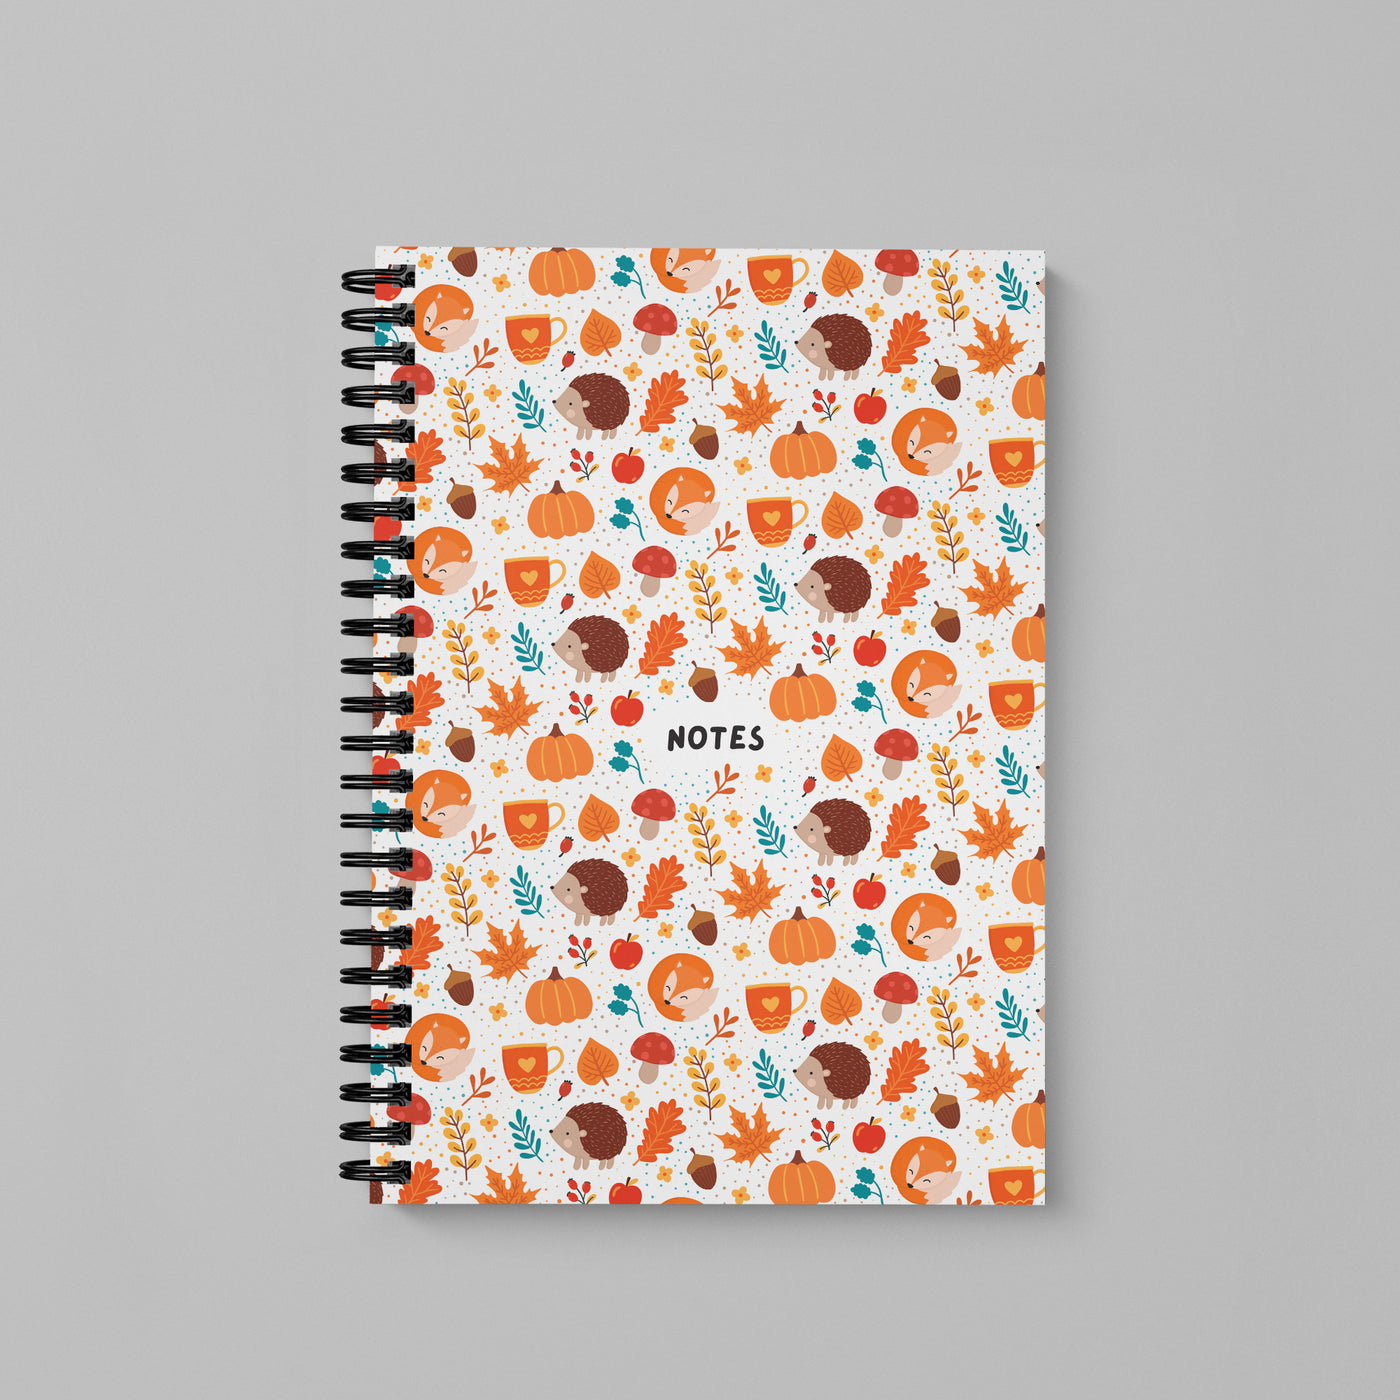 Autumn Forest Spiral Bound Notebook (A5)